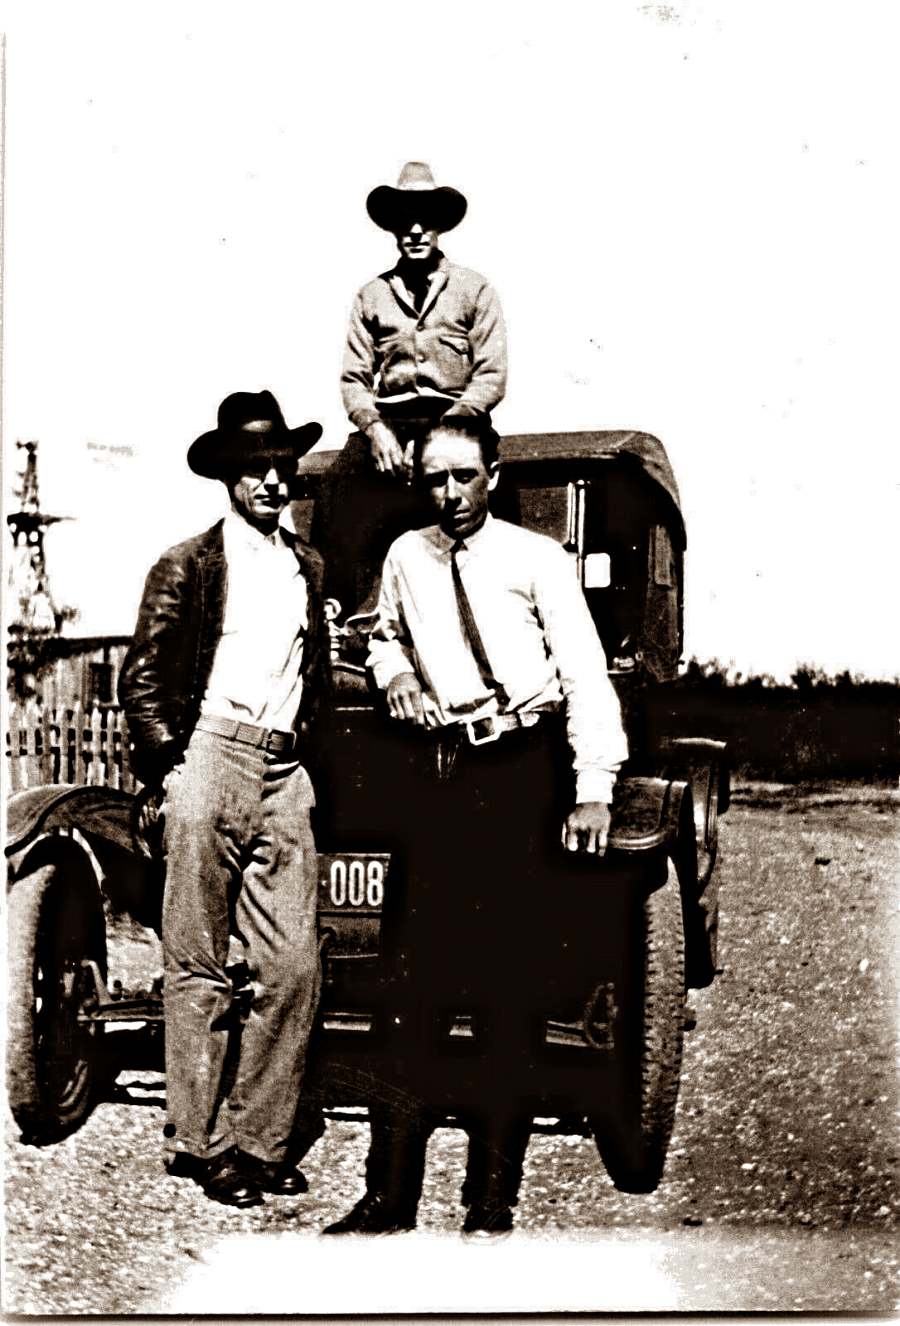 Three Men in Spur Texas in 1920s